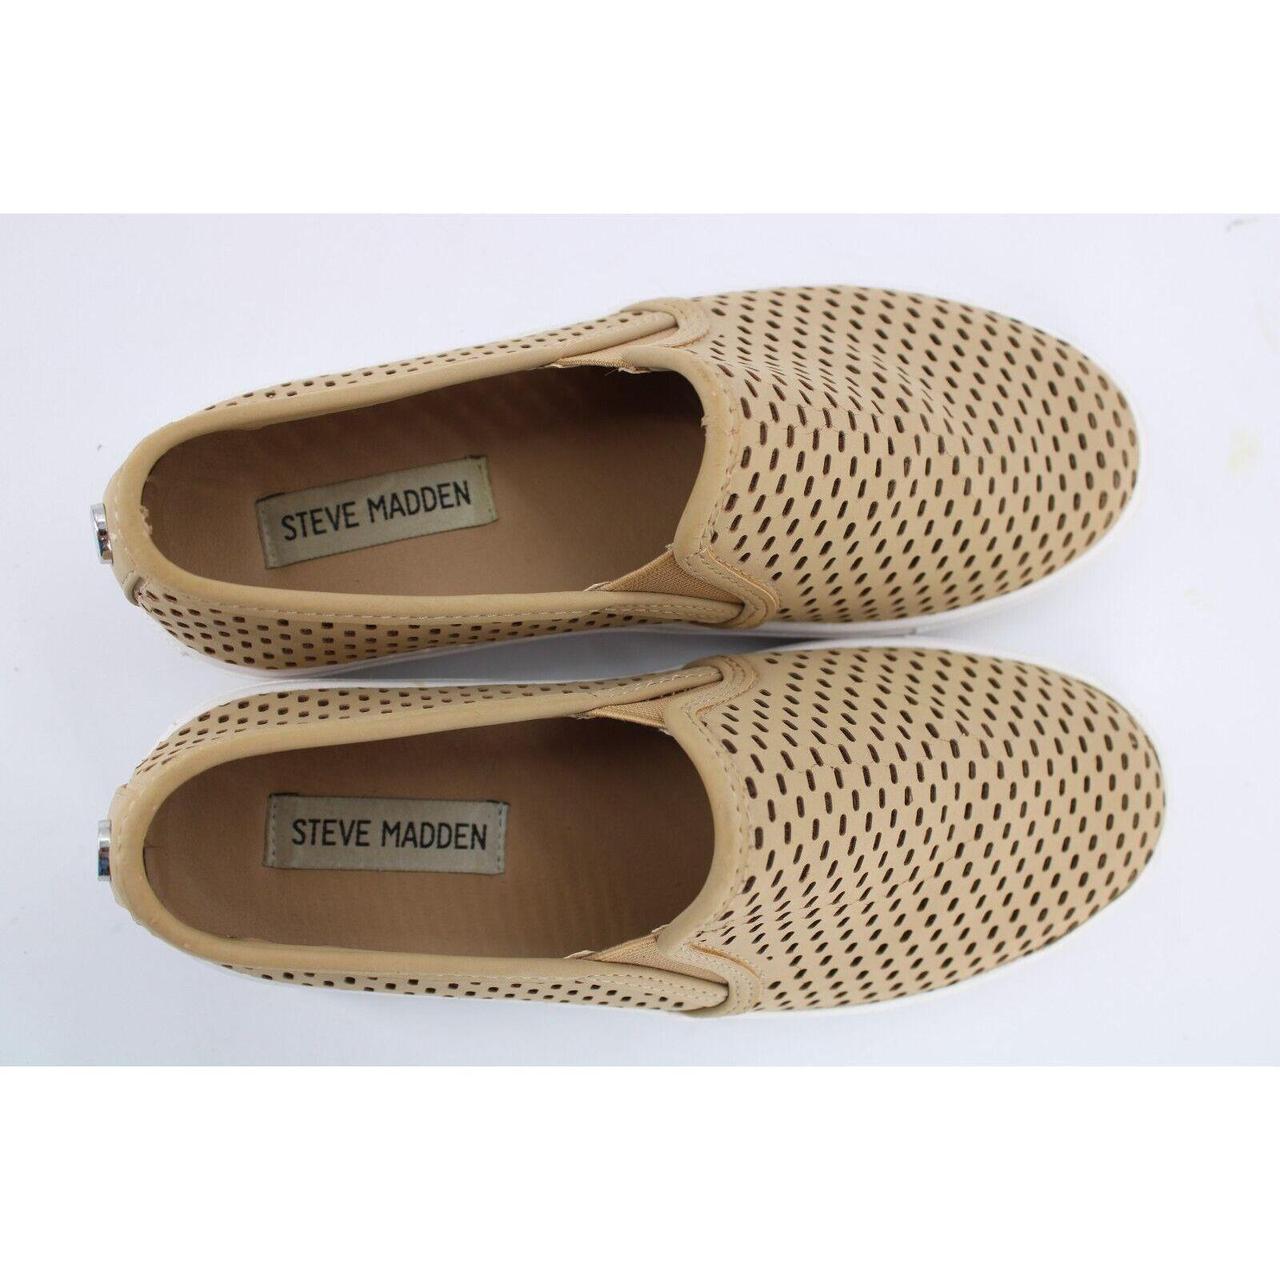 Steve Madden Women's Casual Sneaker Shoes White Toliver Size 6.5 | eBay